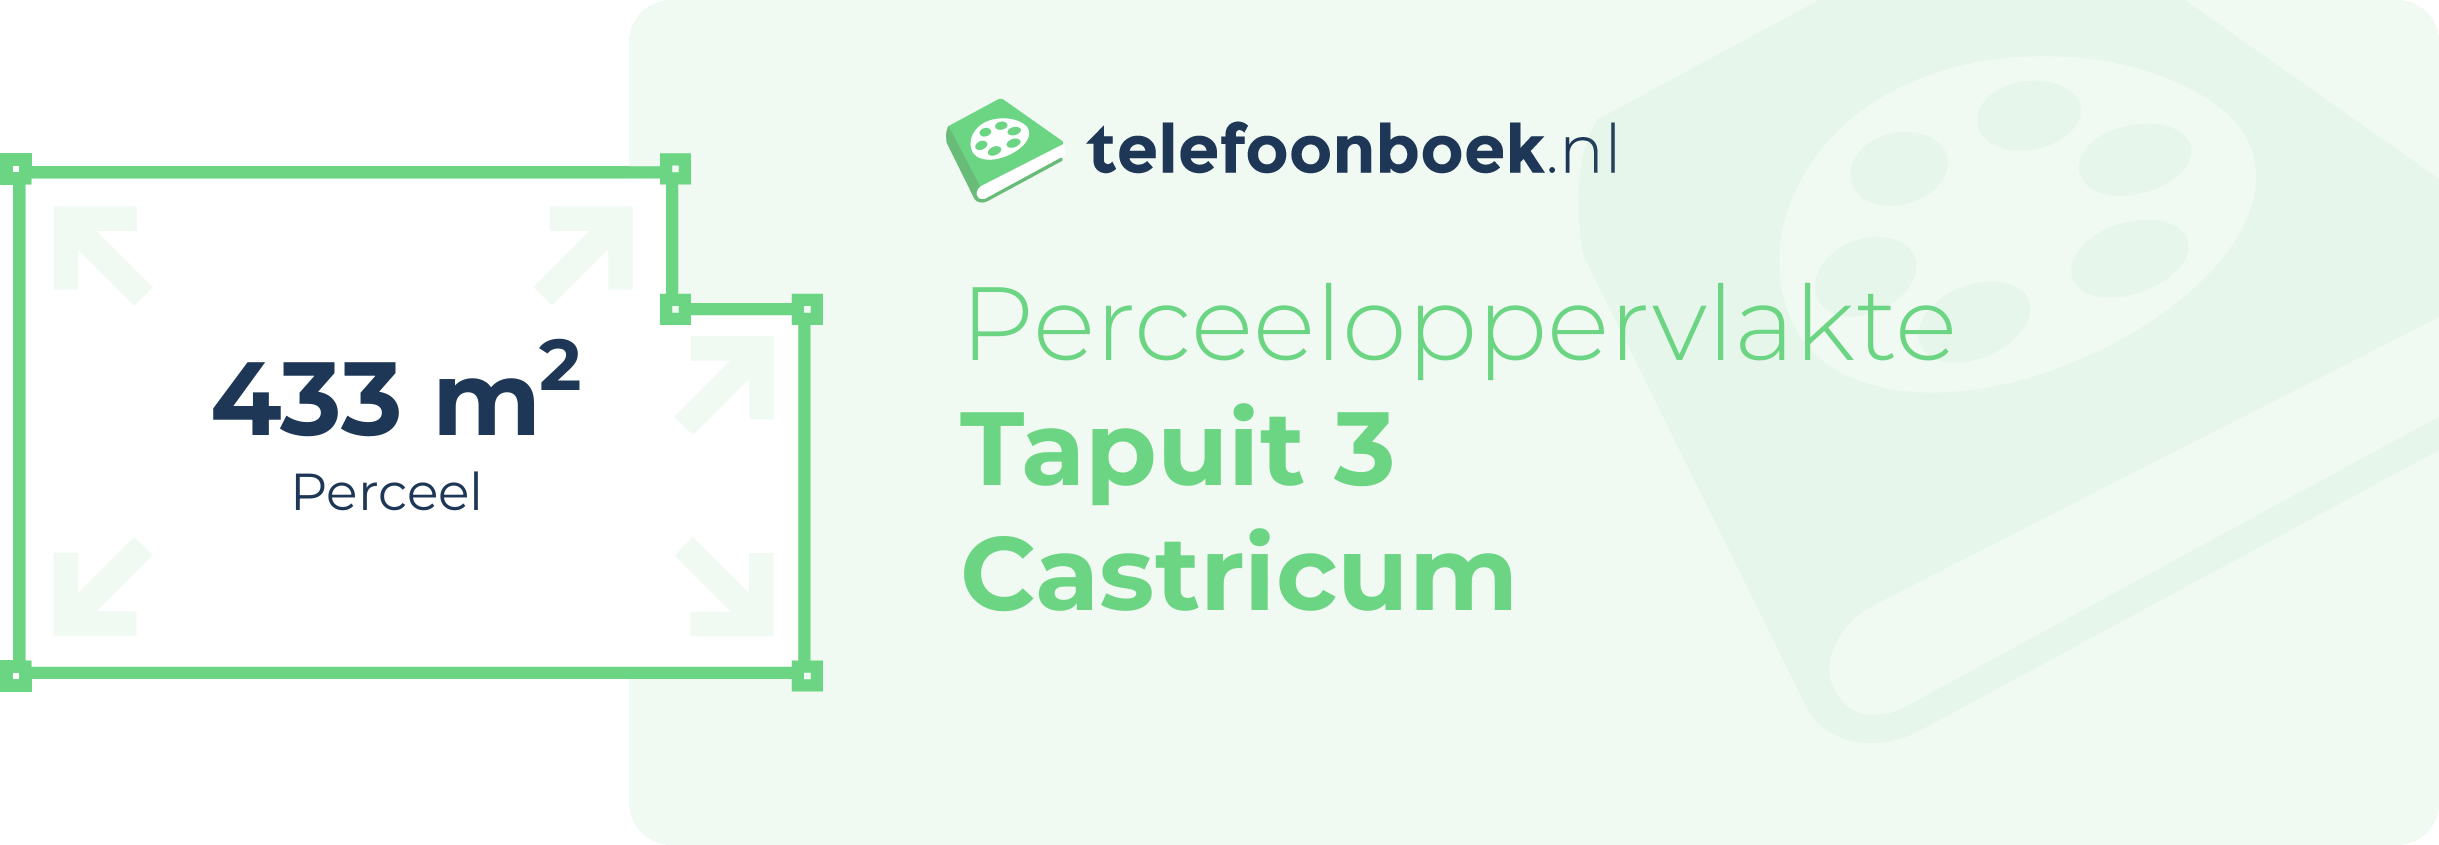 Perceeloppervlakte Tapuit 3 Castricum